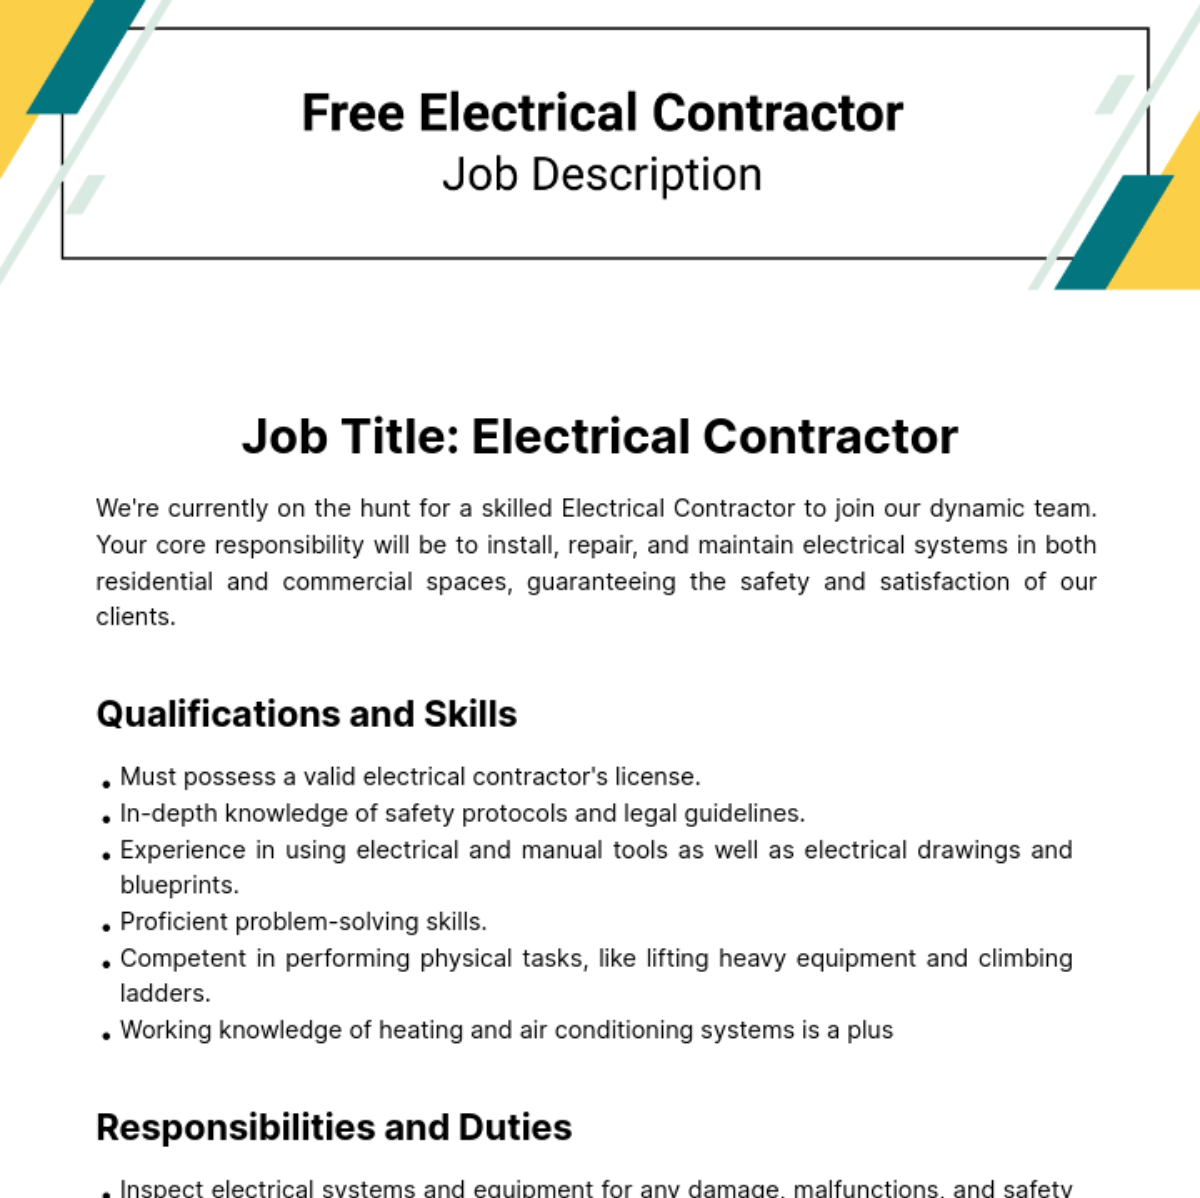 Free Electrical Contractor Job Description Template